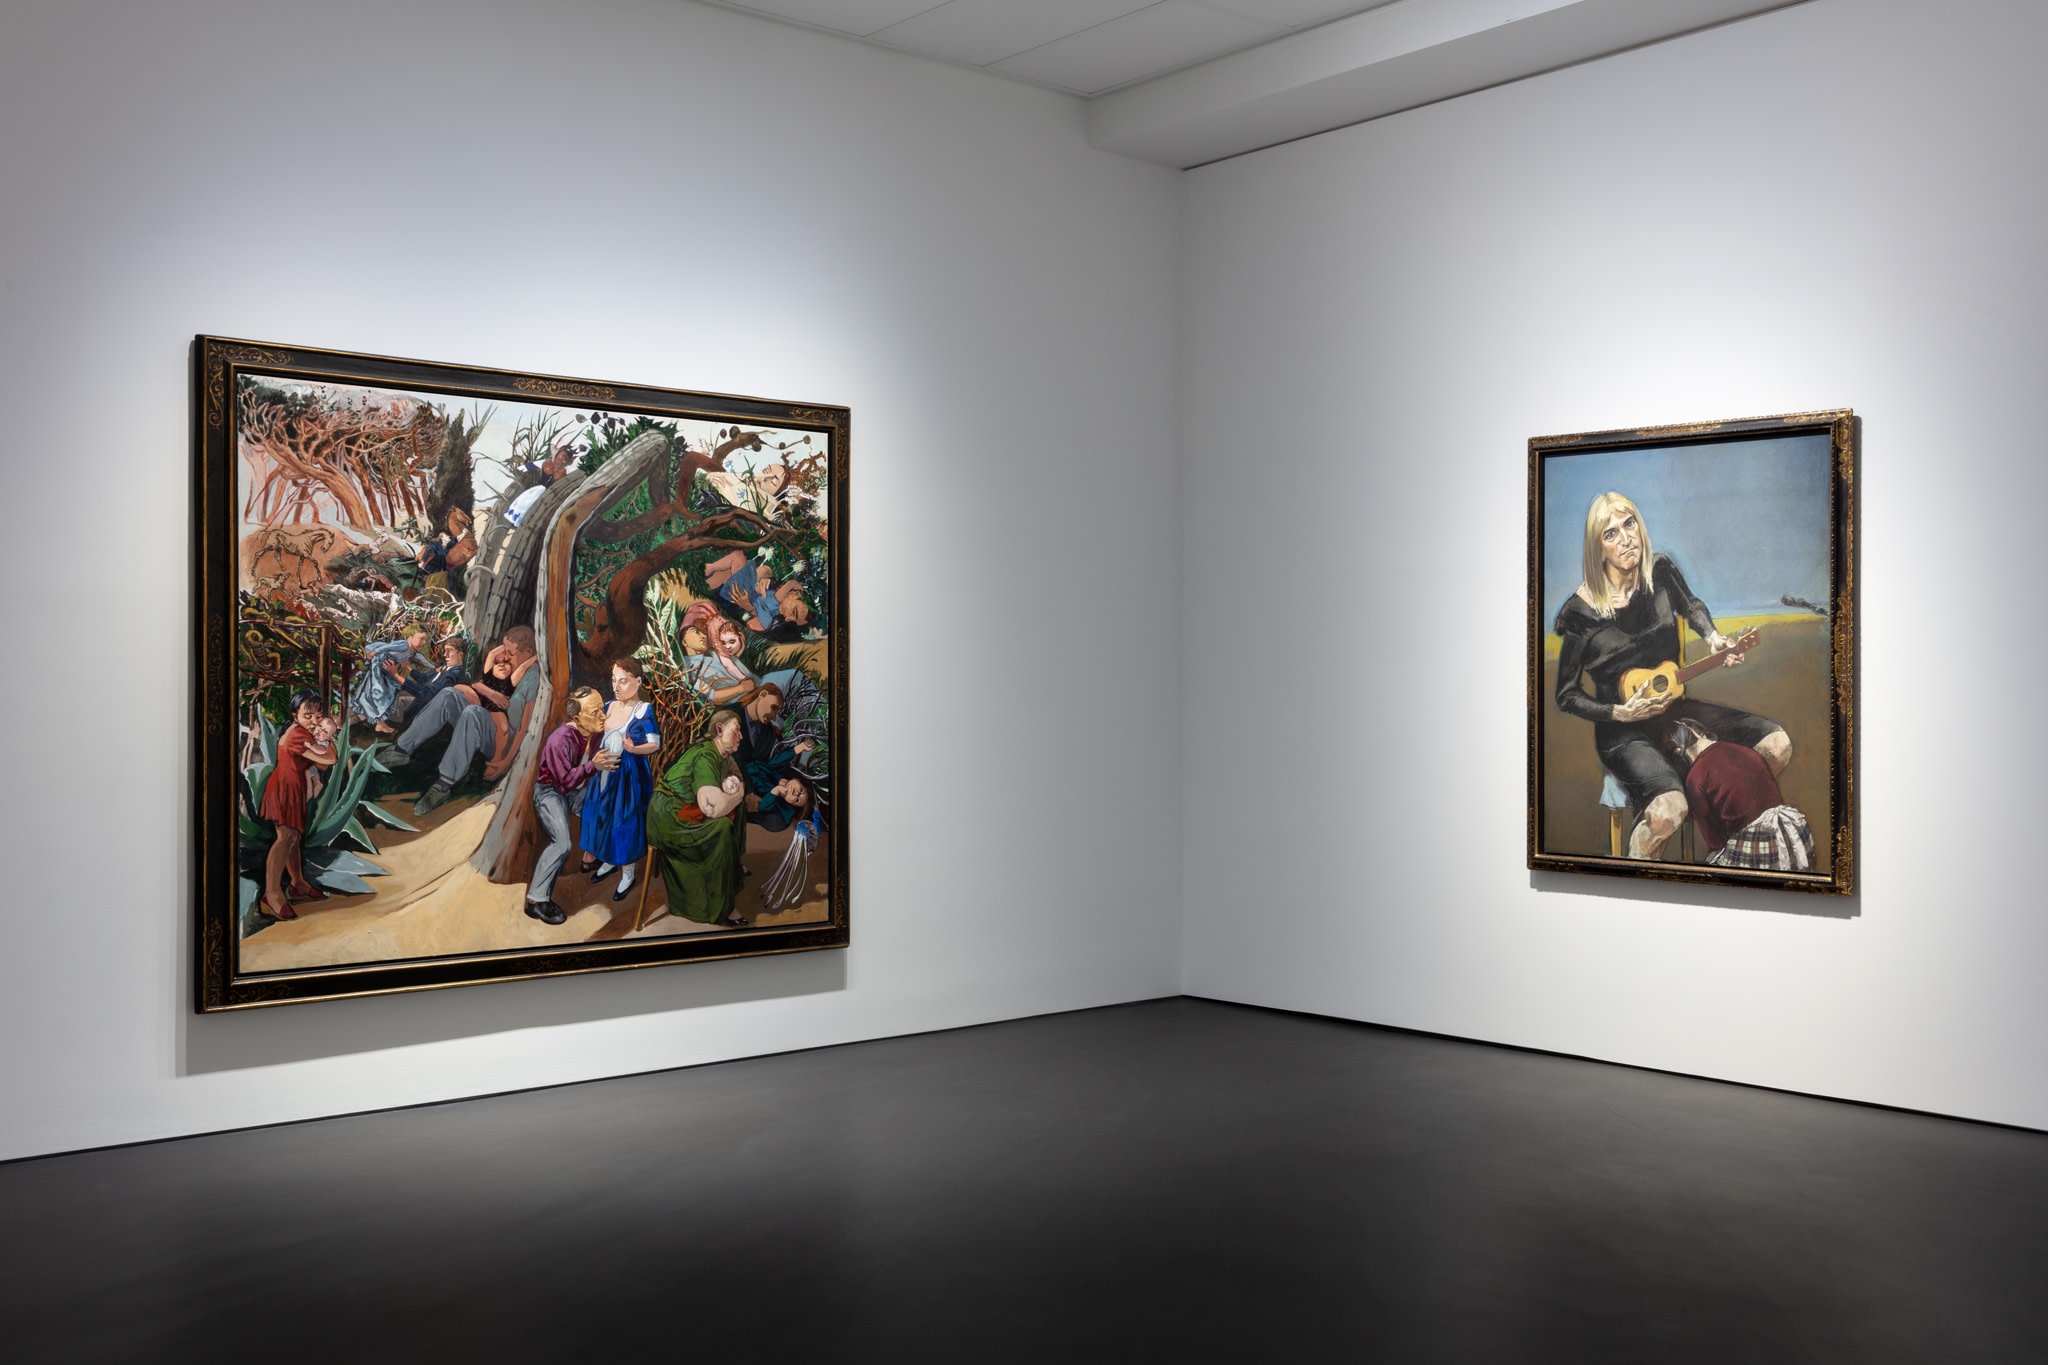 Left: Paula Rego, Caritas, 1993, acrylic on canvas, 200 x 240 cm (78 3/4 x 94 1/2 in); right: Paula Rego, Olga, 2003, pastel on paper, mounted on aluminum, 160 x 120 cm (63 x 47 1/4 in). Photo © Andrea Rossetti